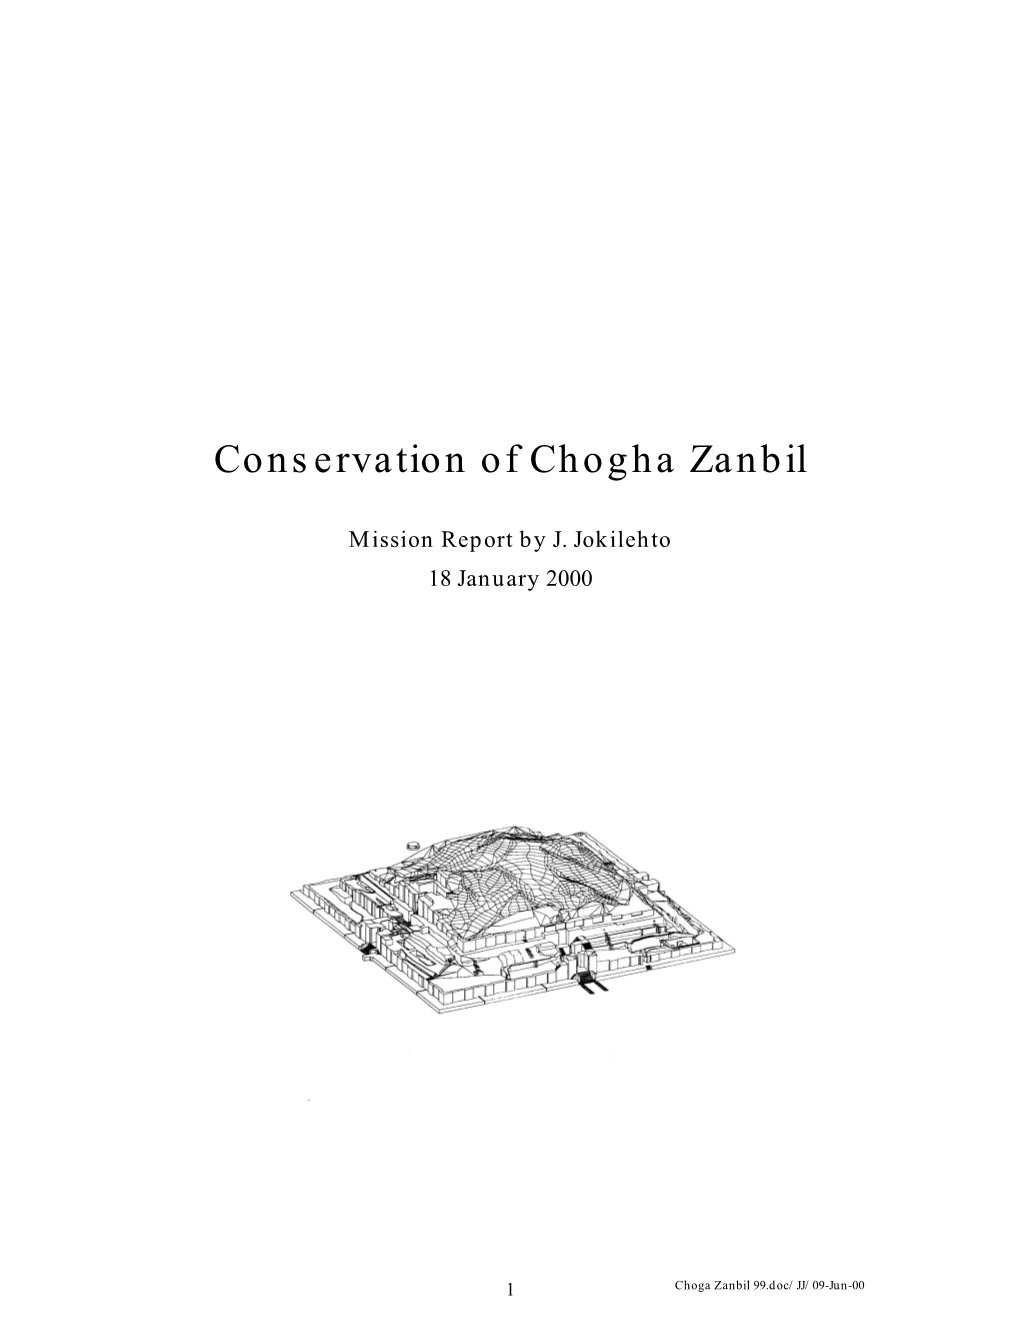 Conservation of Chogha Zanbil